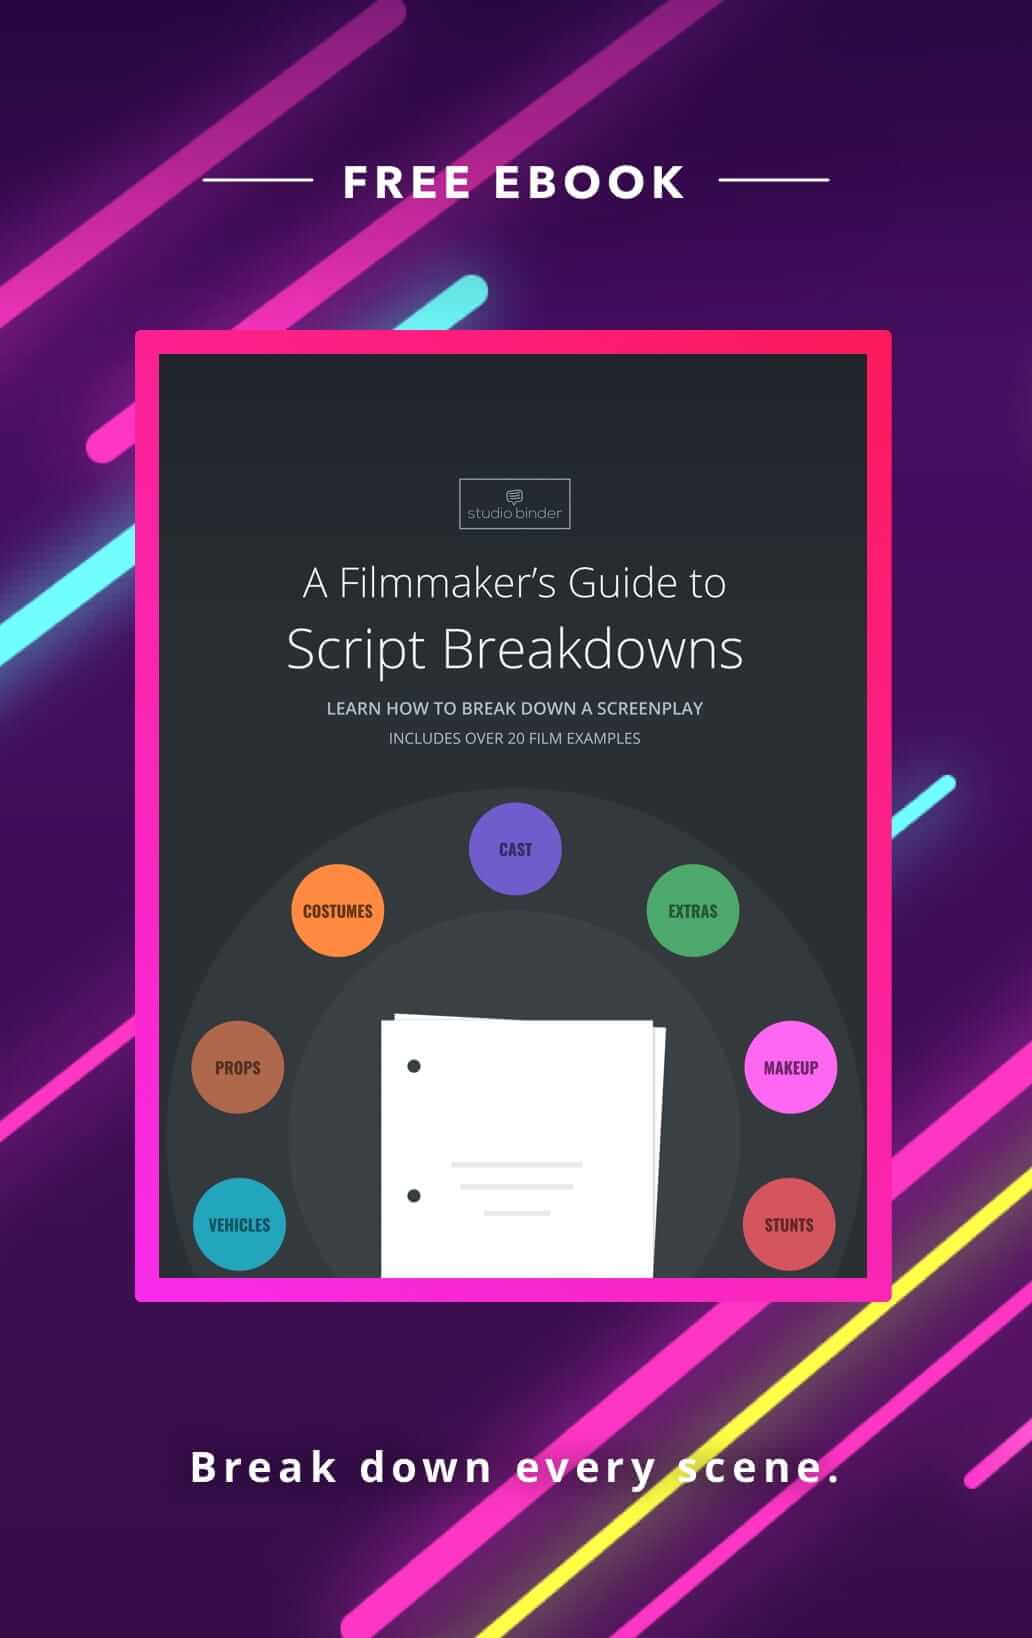 Free Ebook - Filmmakers Guide to Script Breakdowns - How to Break Down a Script - StudioBinder